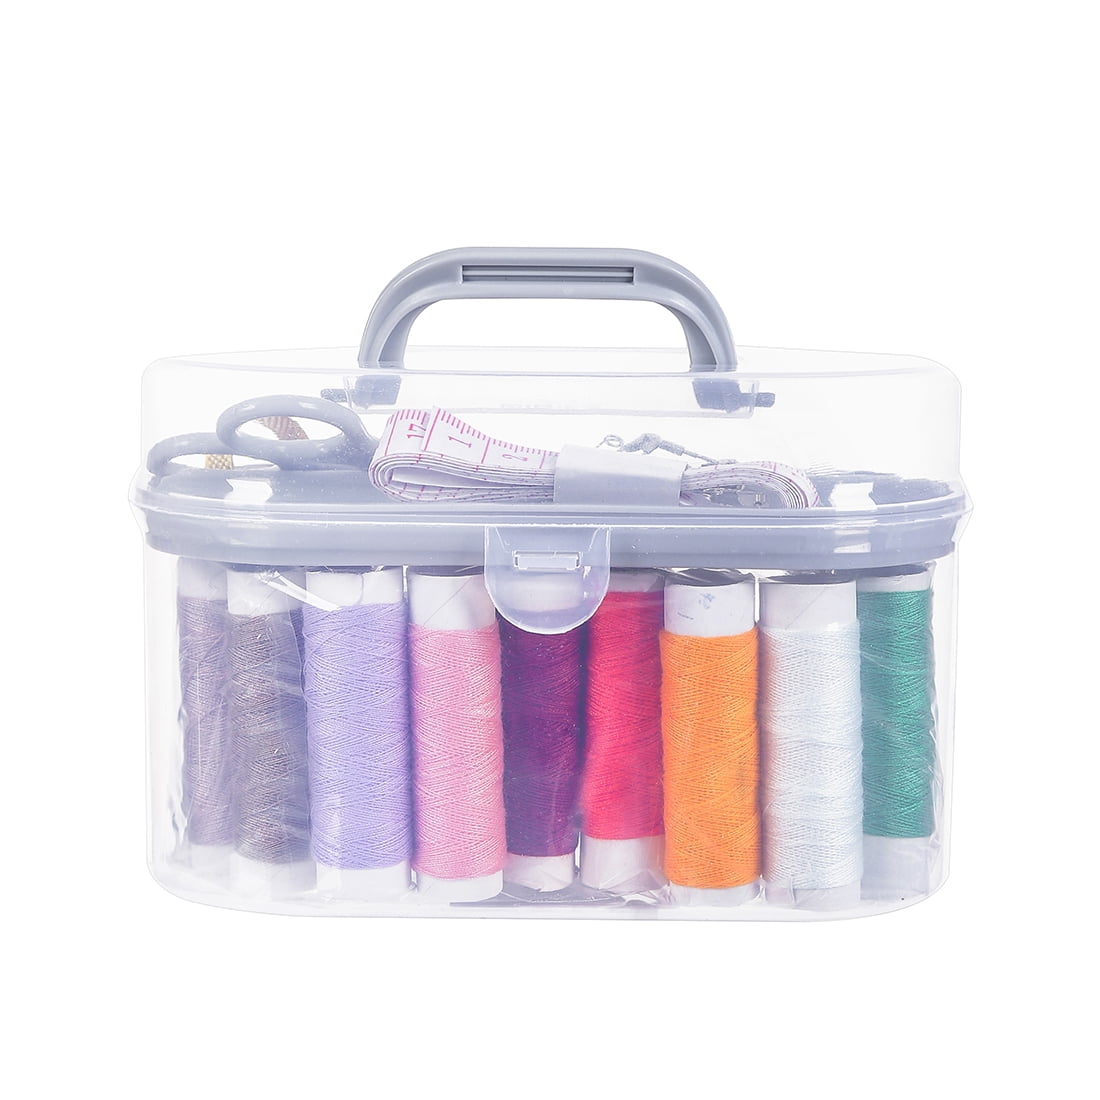 Mini Travel Sewing Kit Case Set Pocket Style Home Needle Thread Scissors  Purple